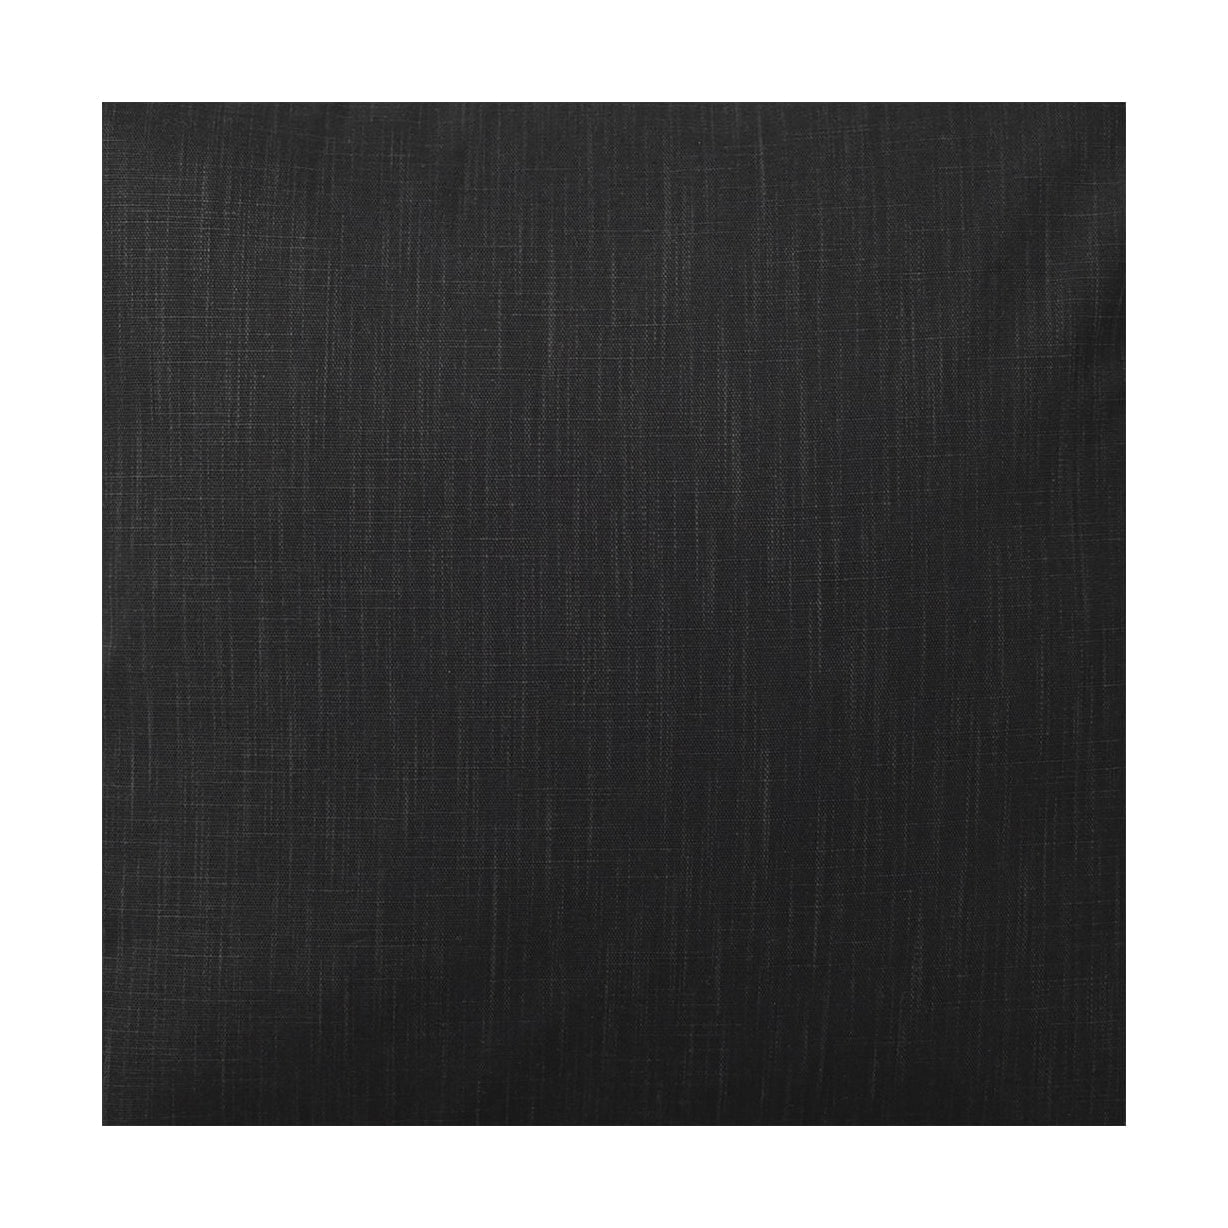 Spira Klotz -stofbreedte 150 cm (prijs per meter), asfalt